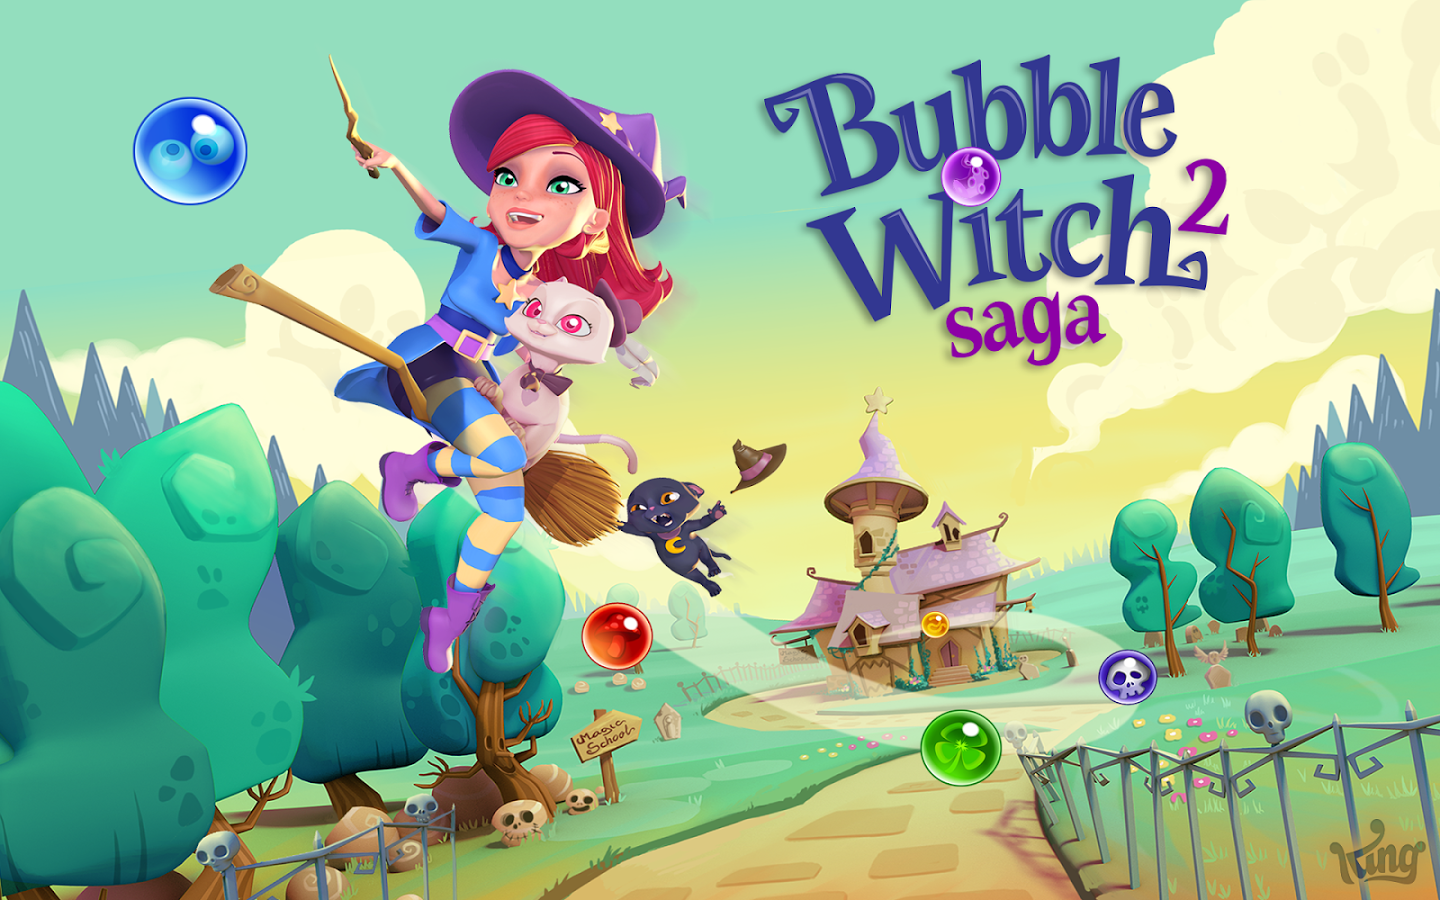 Bubble witch 3 saga 489